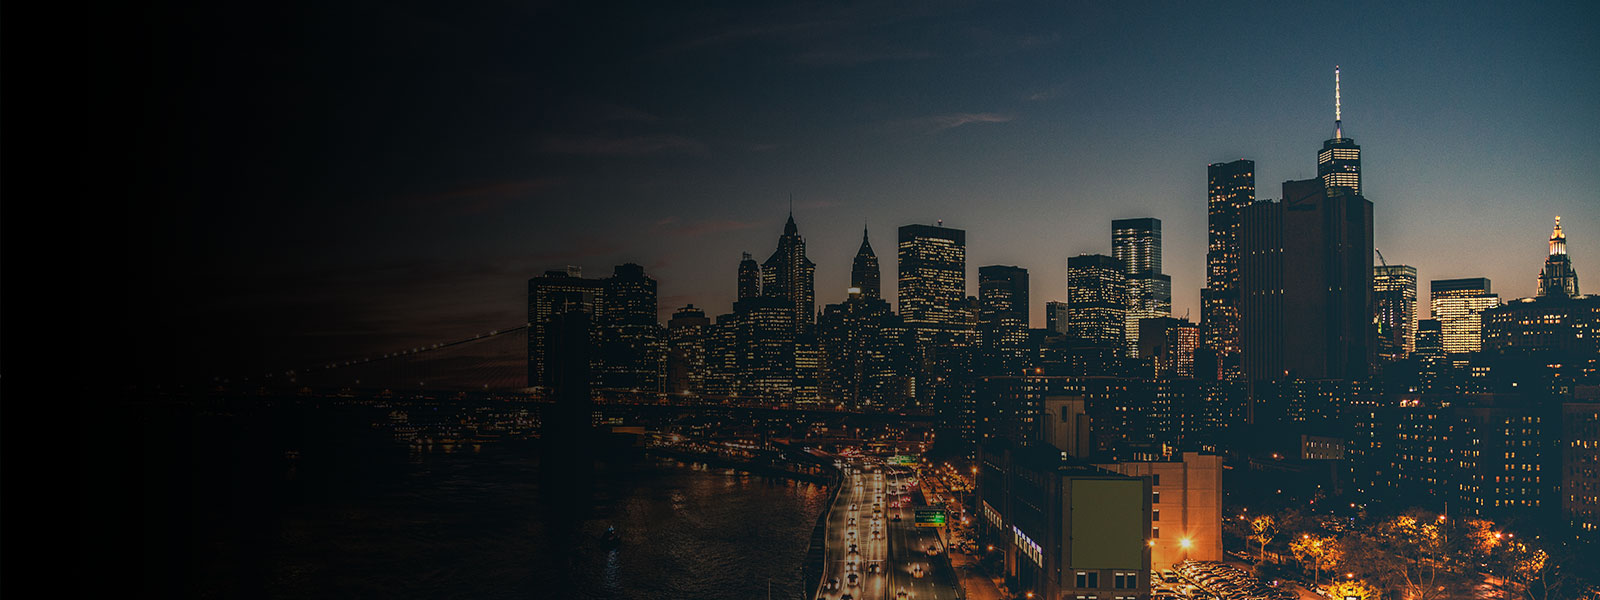 New York city lights